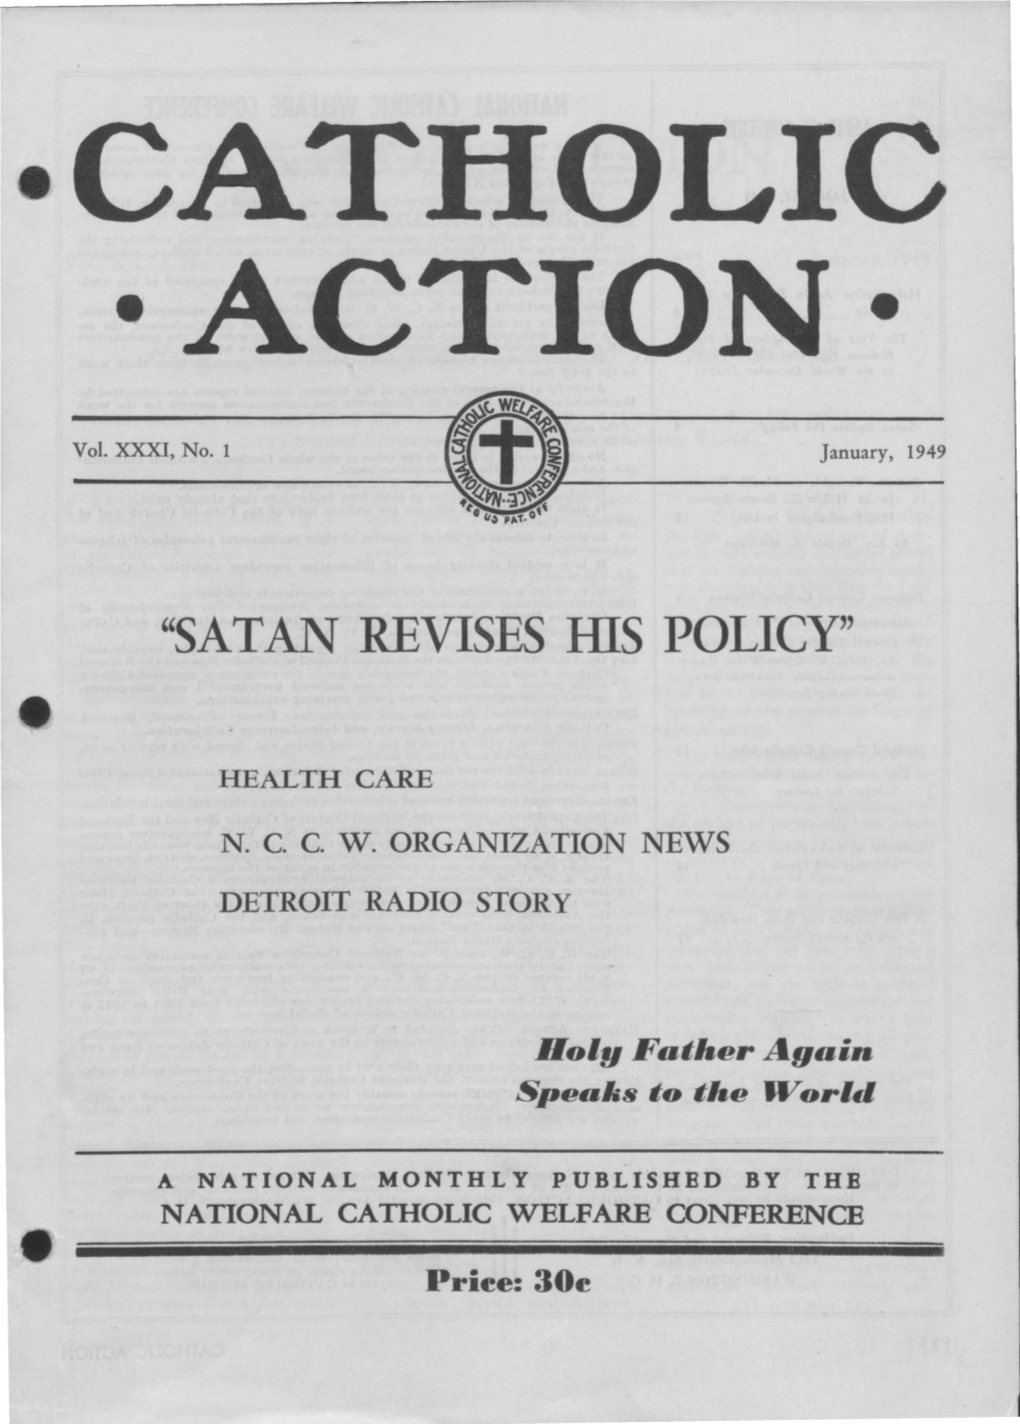 "Satan Revises His Policy"